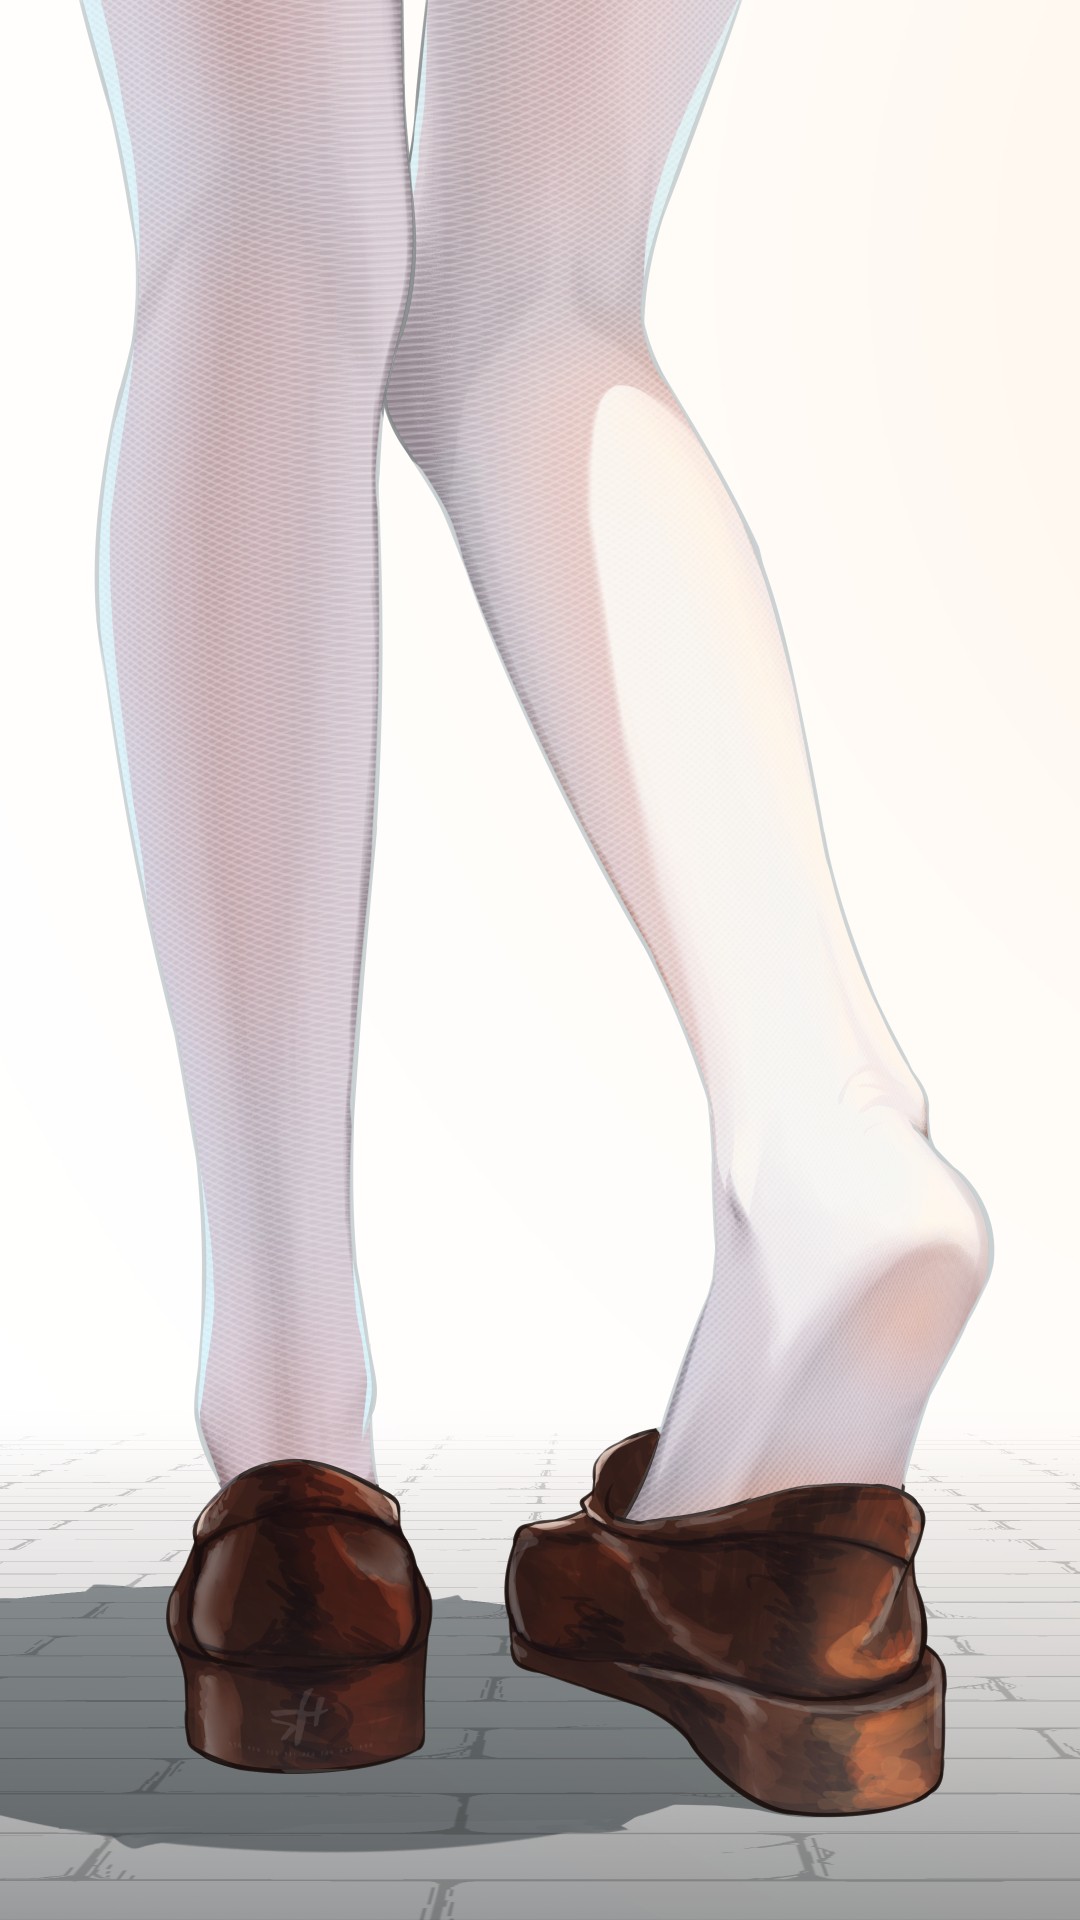 Anime 1080x1920 socks portrait display anime girls feet simple background minimalism Pixiv